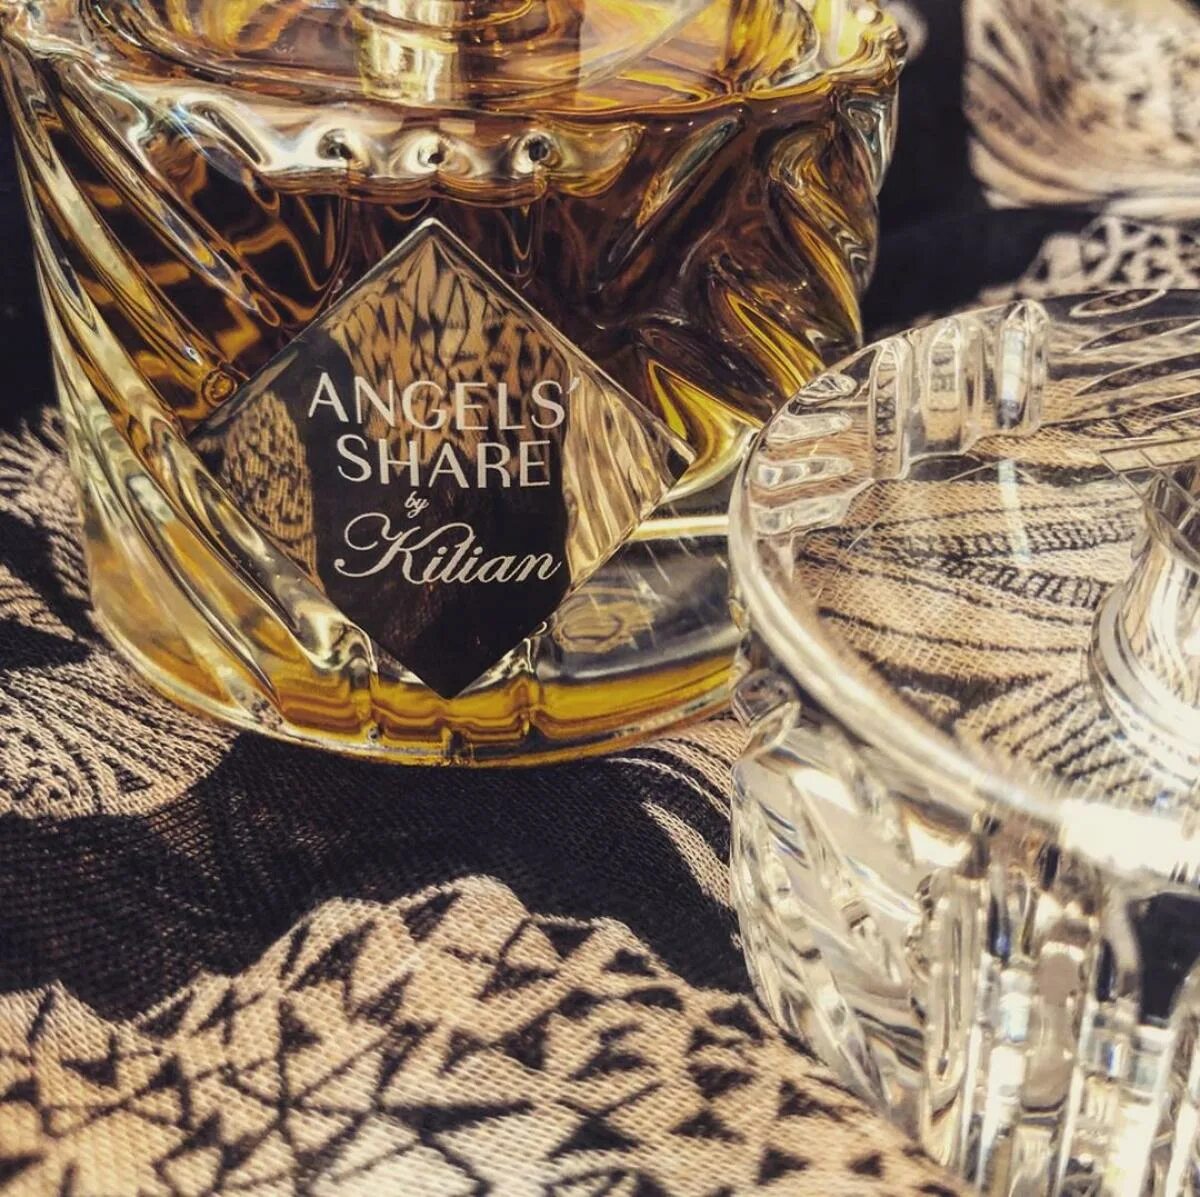 Ангел шаре килиан. Kilian Eau de Parfum Angel's share. Парфюм Angels share Kilian. Kilian Angels share 50ml EDP. Kilian Angel's share 50 ml.